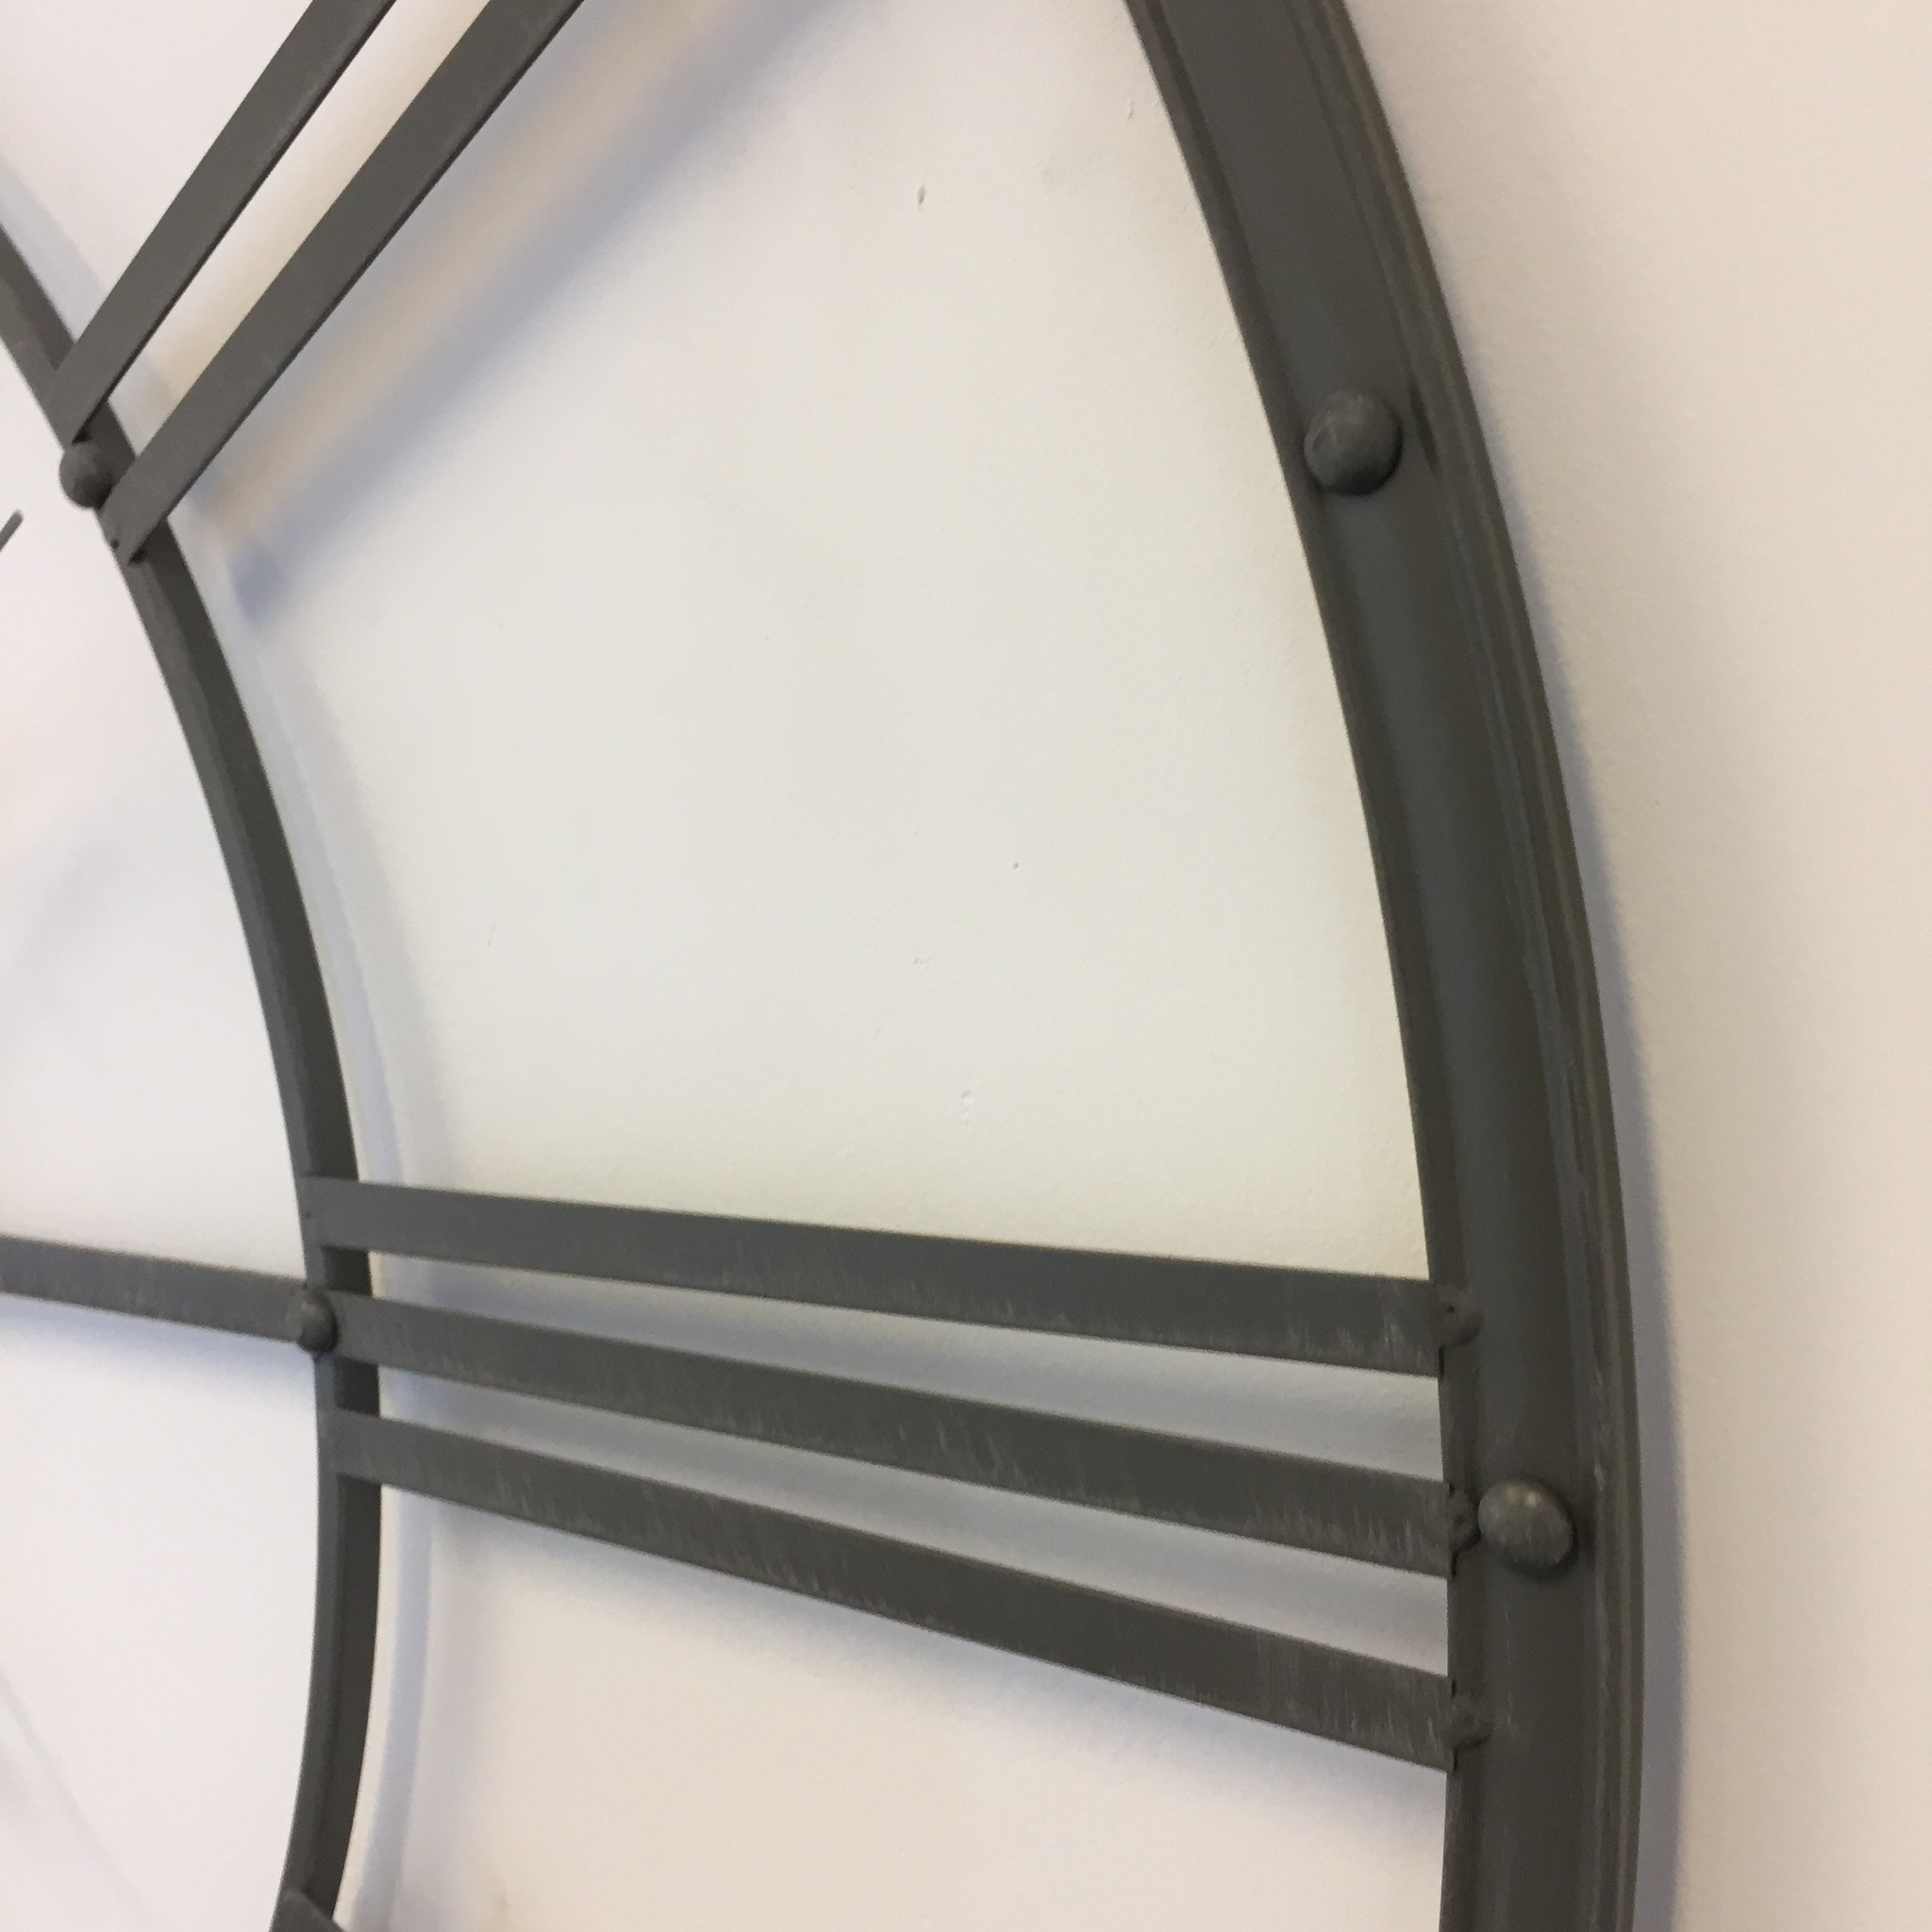 Klokkendiscounter Design - Wall clock The Gray XXL Vintage Industrial Design